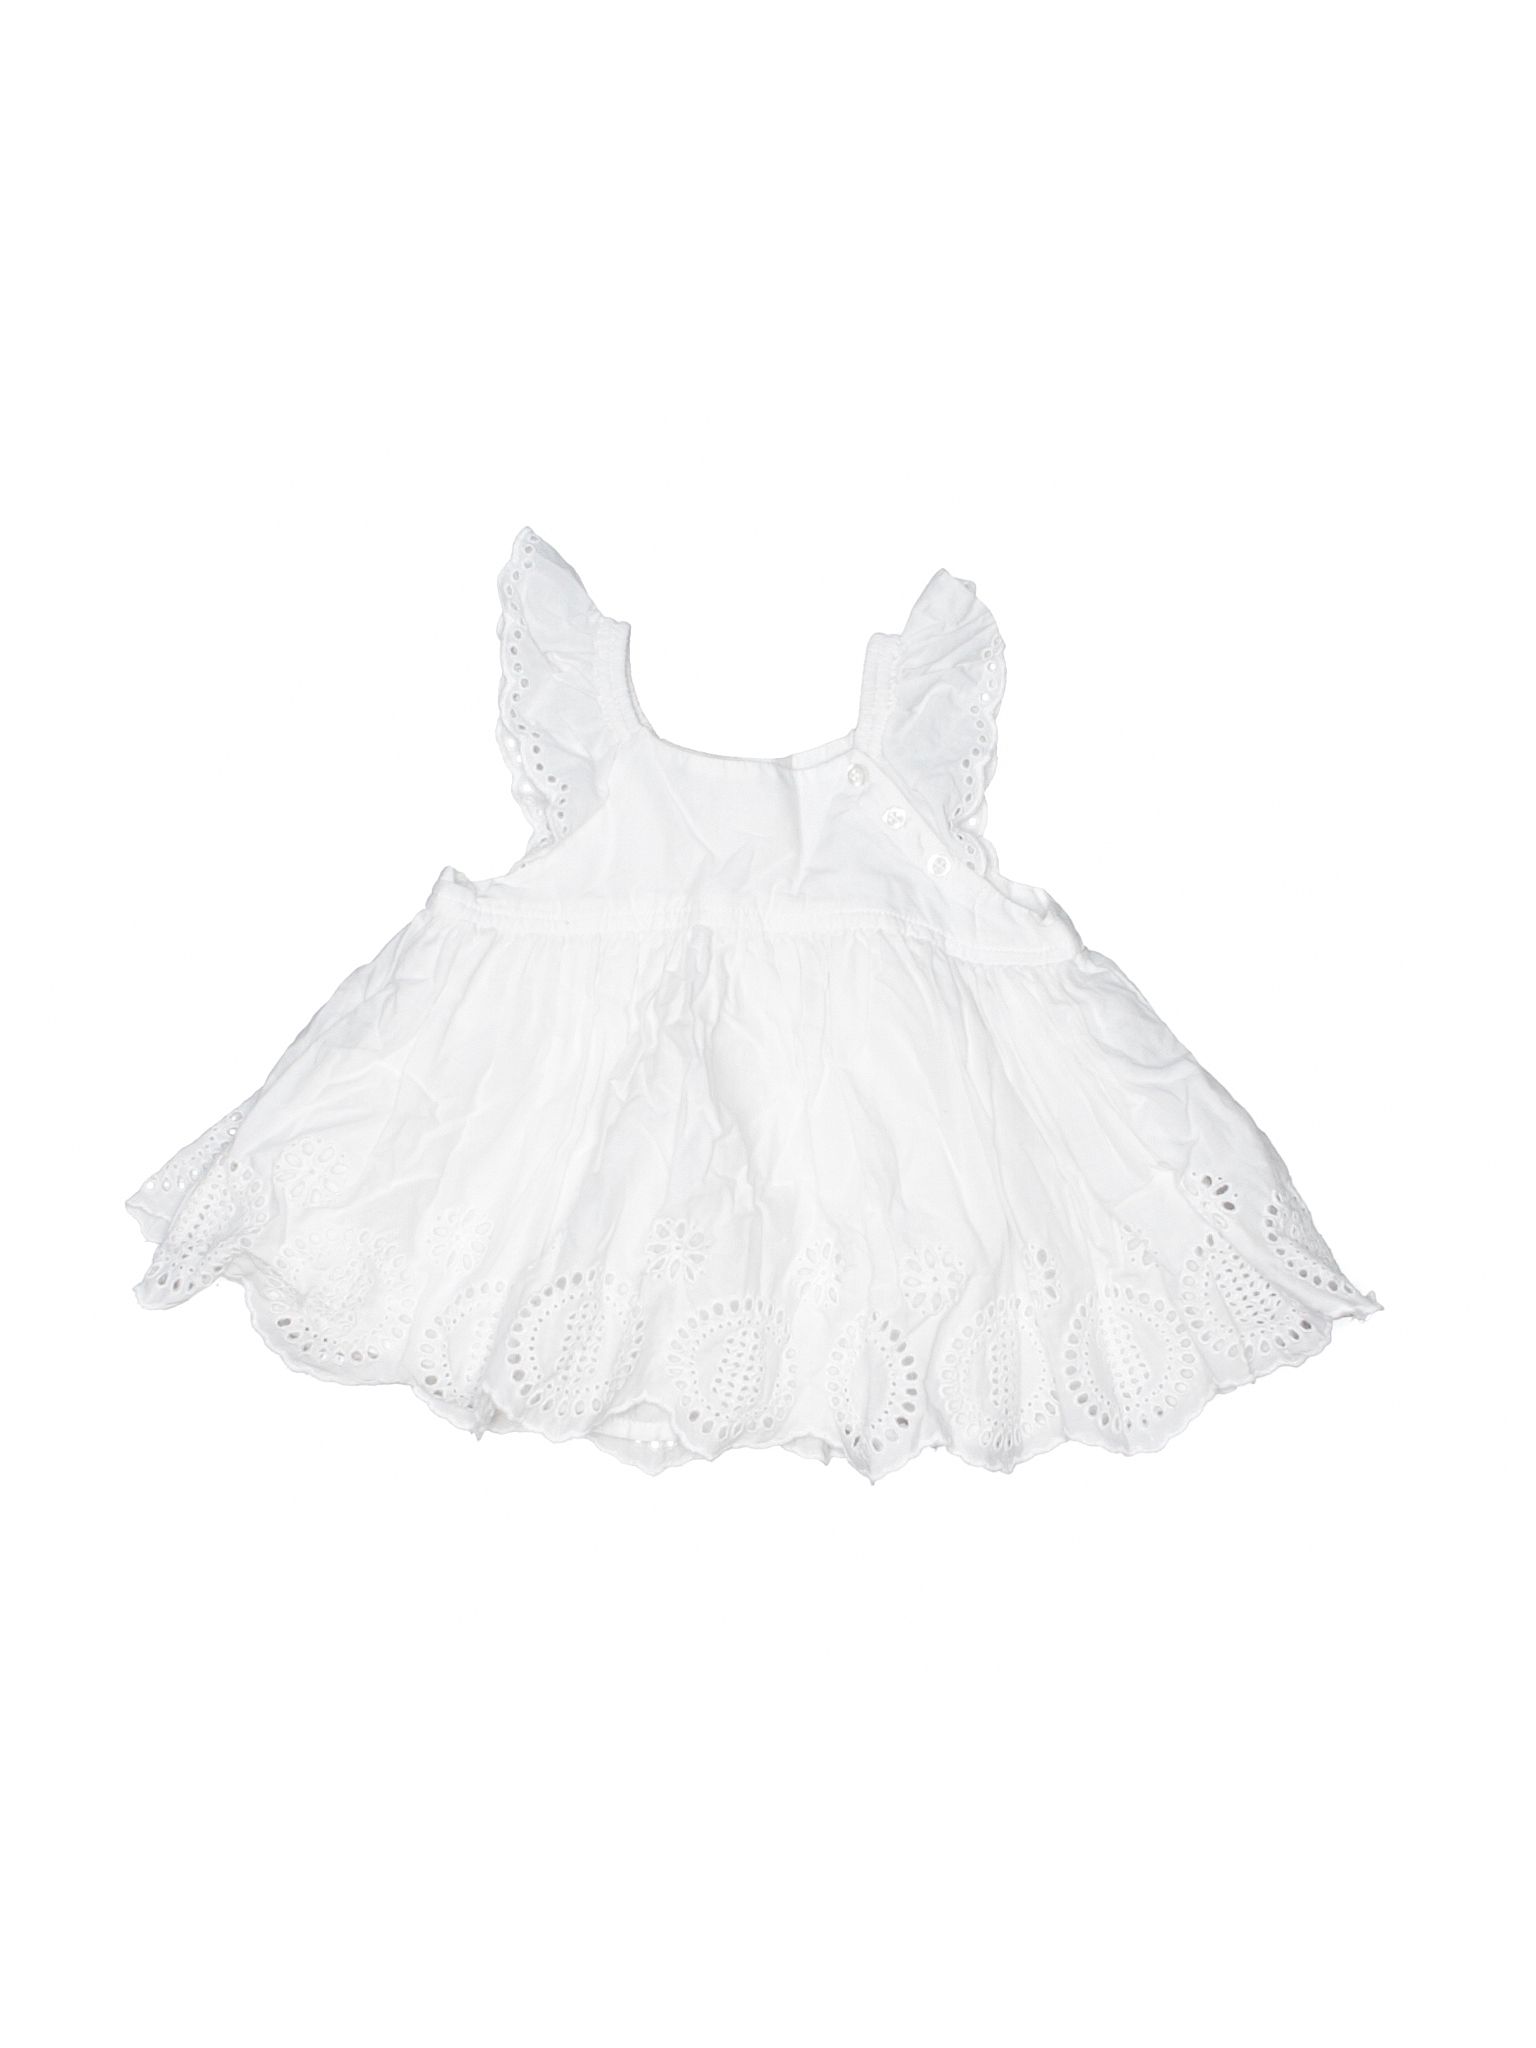 Baby Gap Dress Size 18 mo: White Girls Skirts & Dresses - 29831099 | thredUP